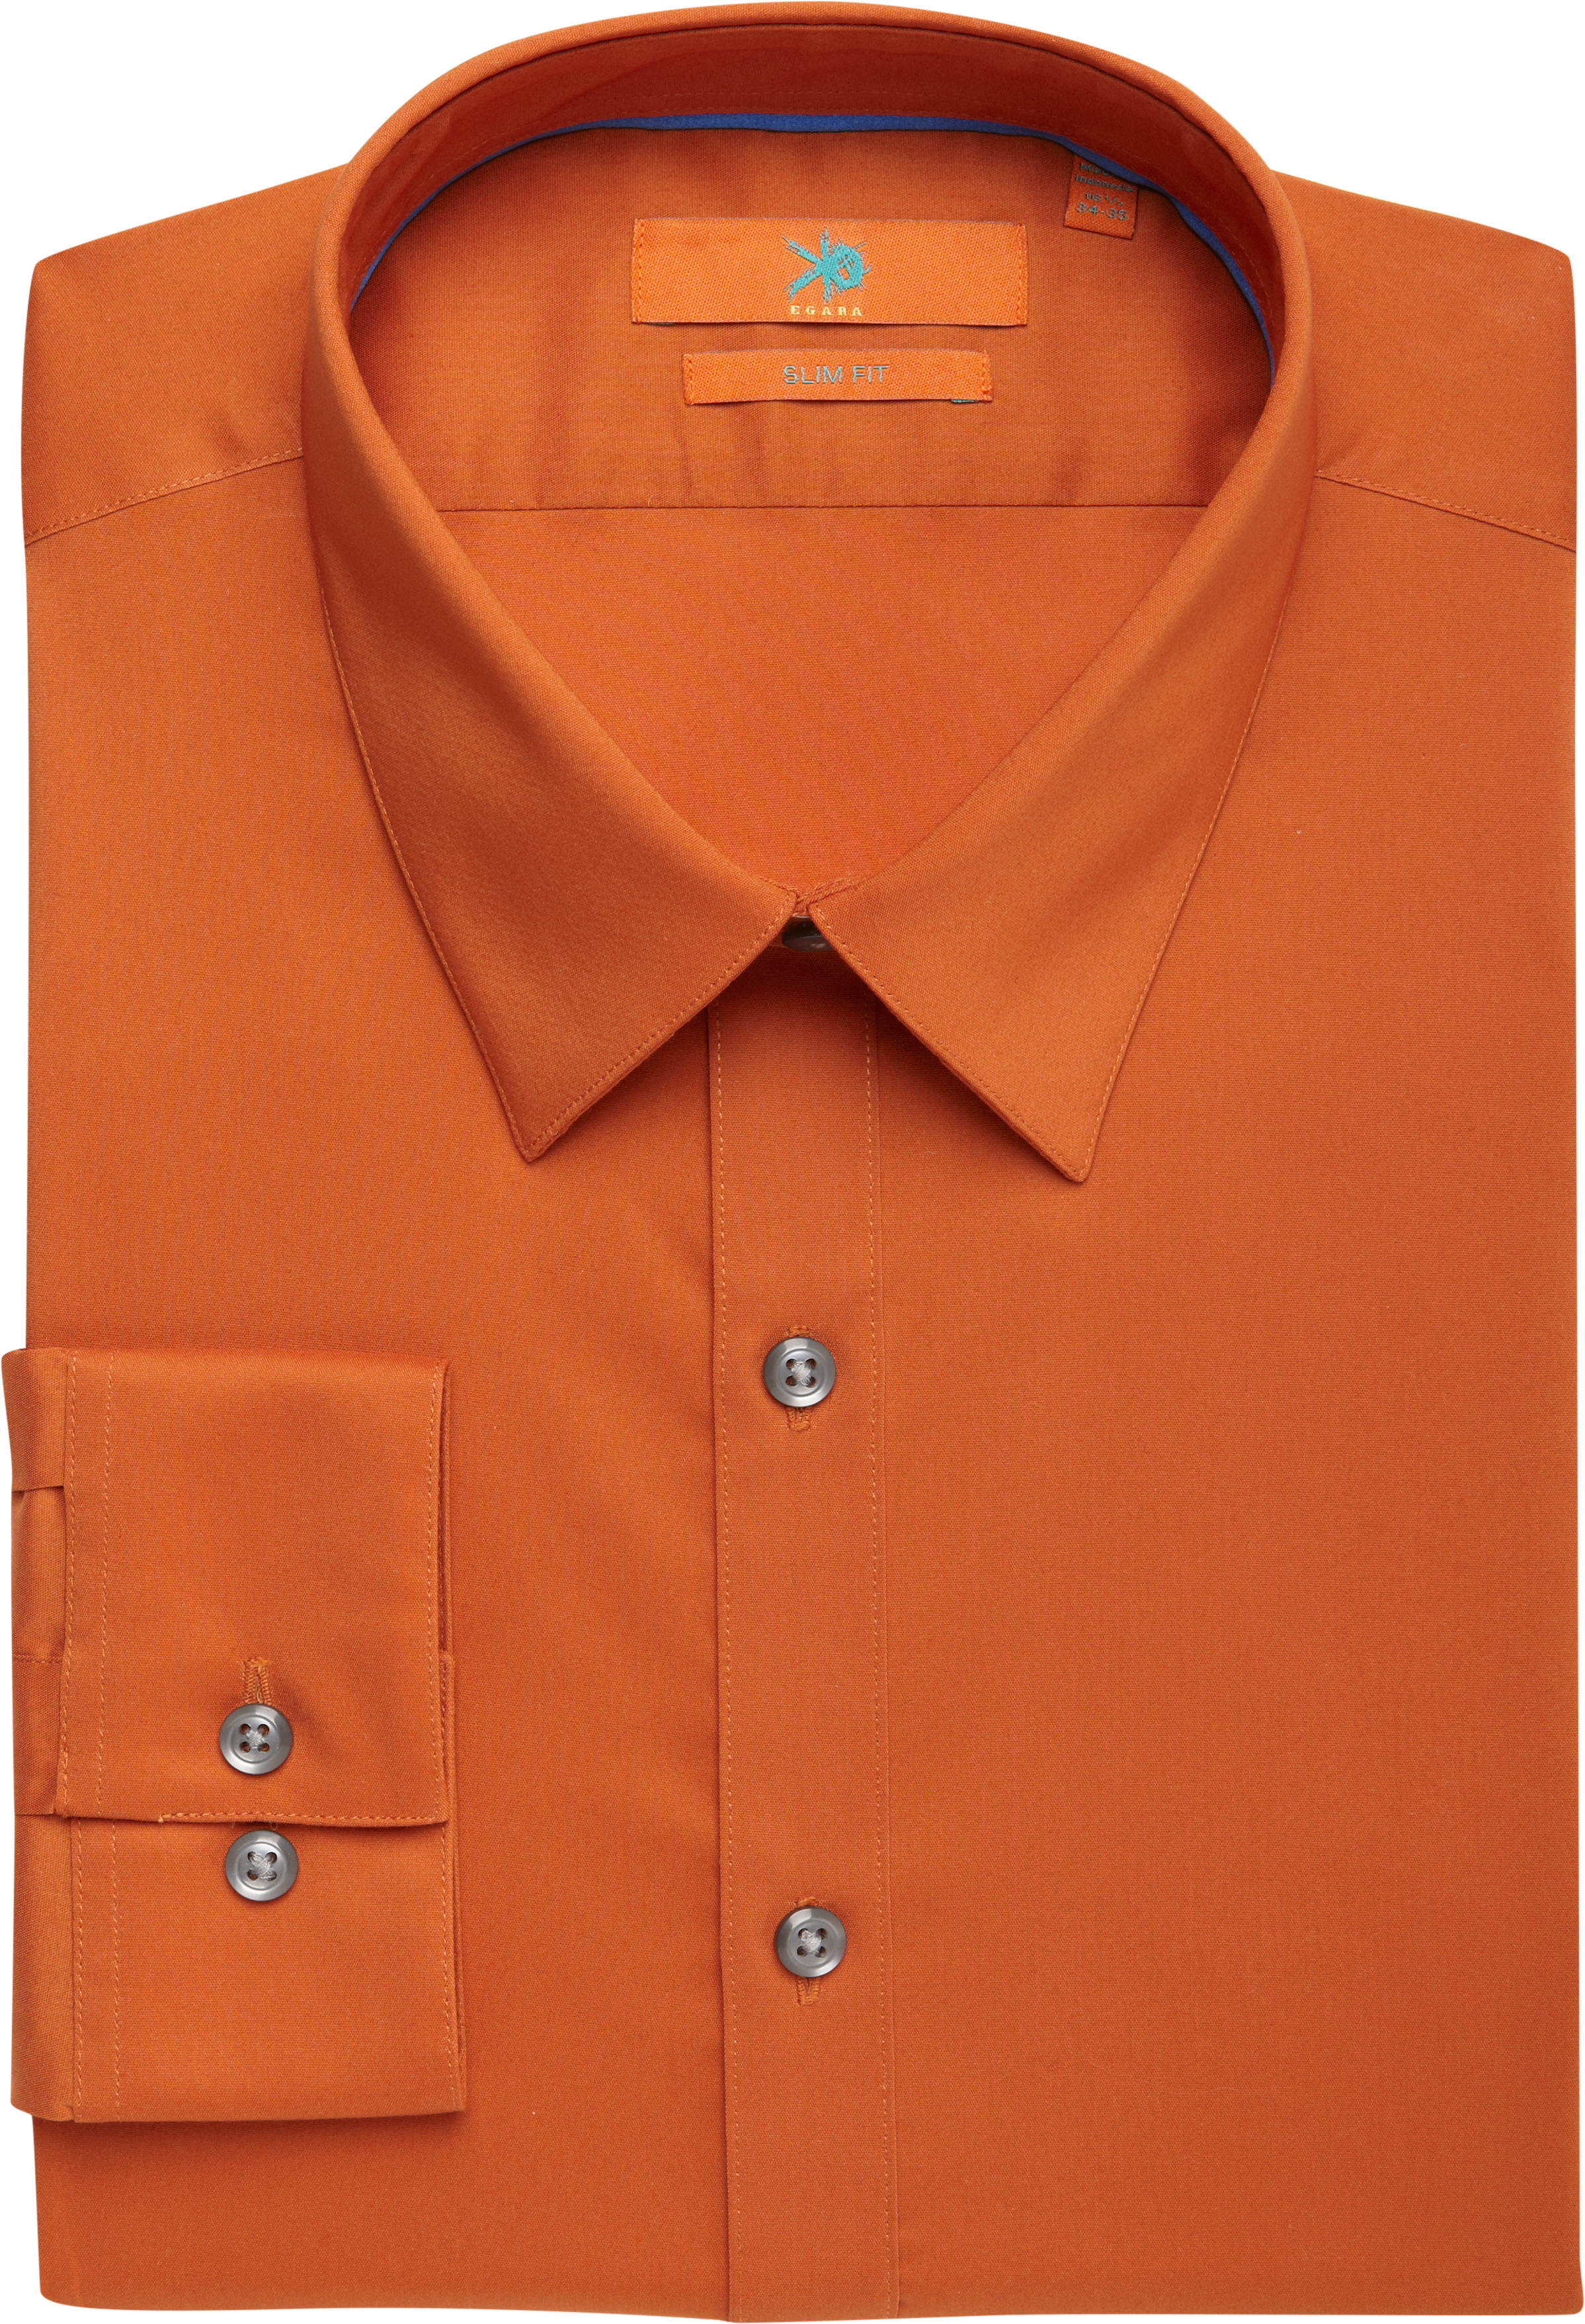 Mens Orange Dress Shirt | Mens Wearhouse